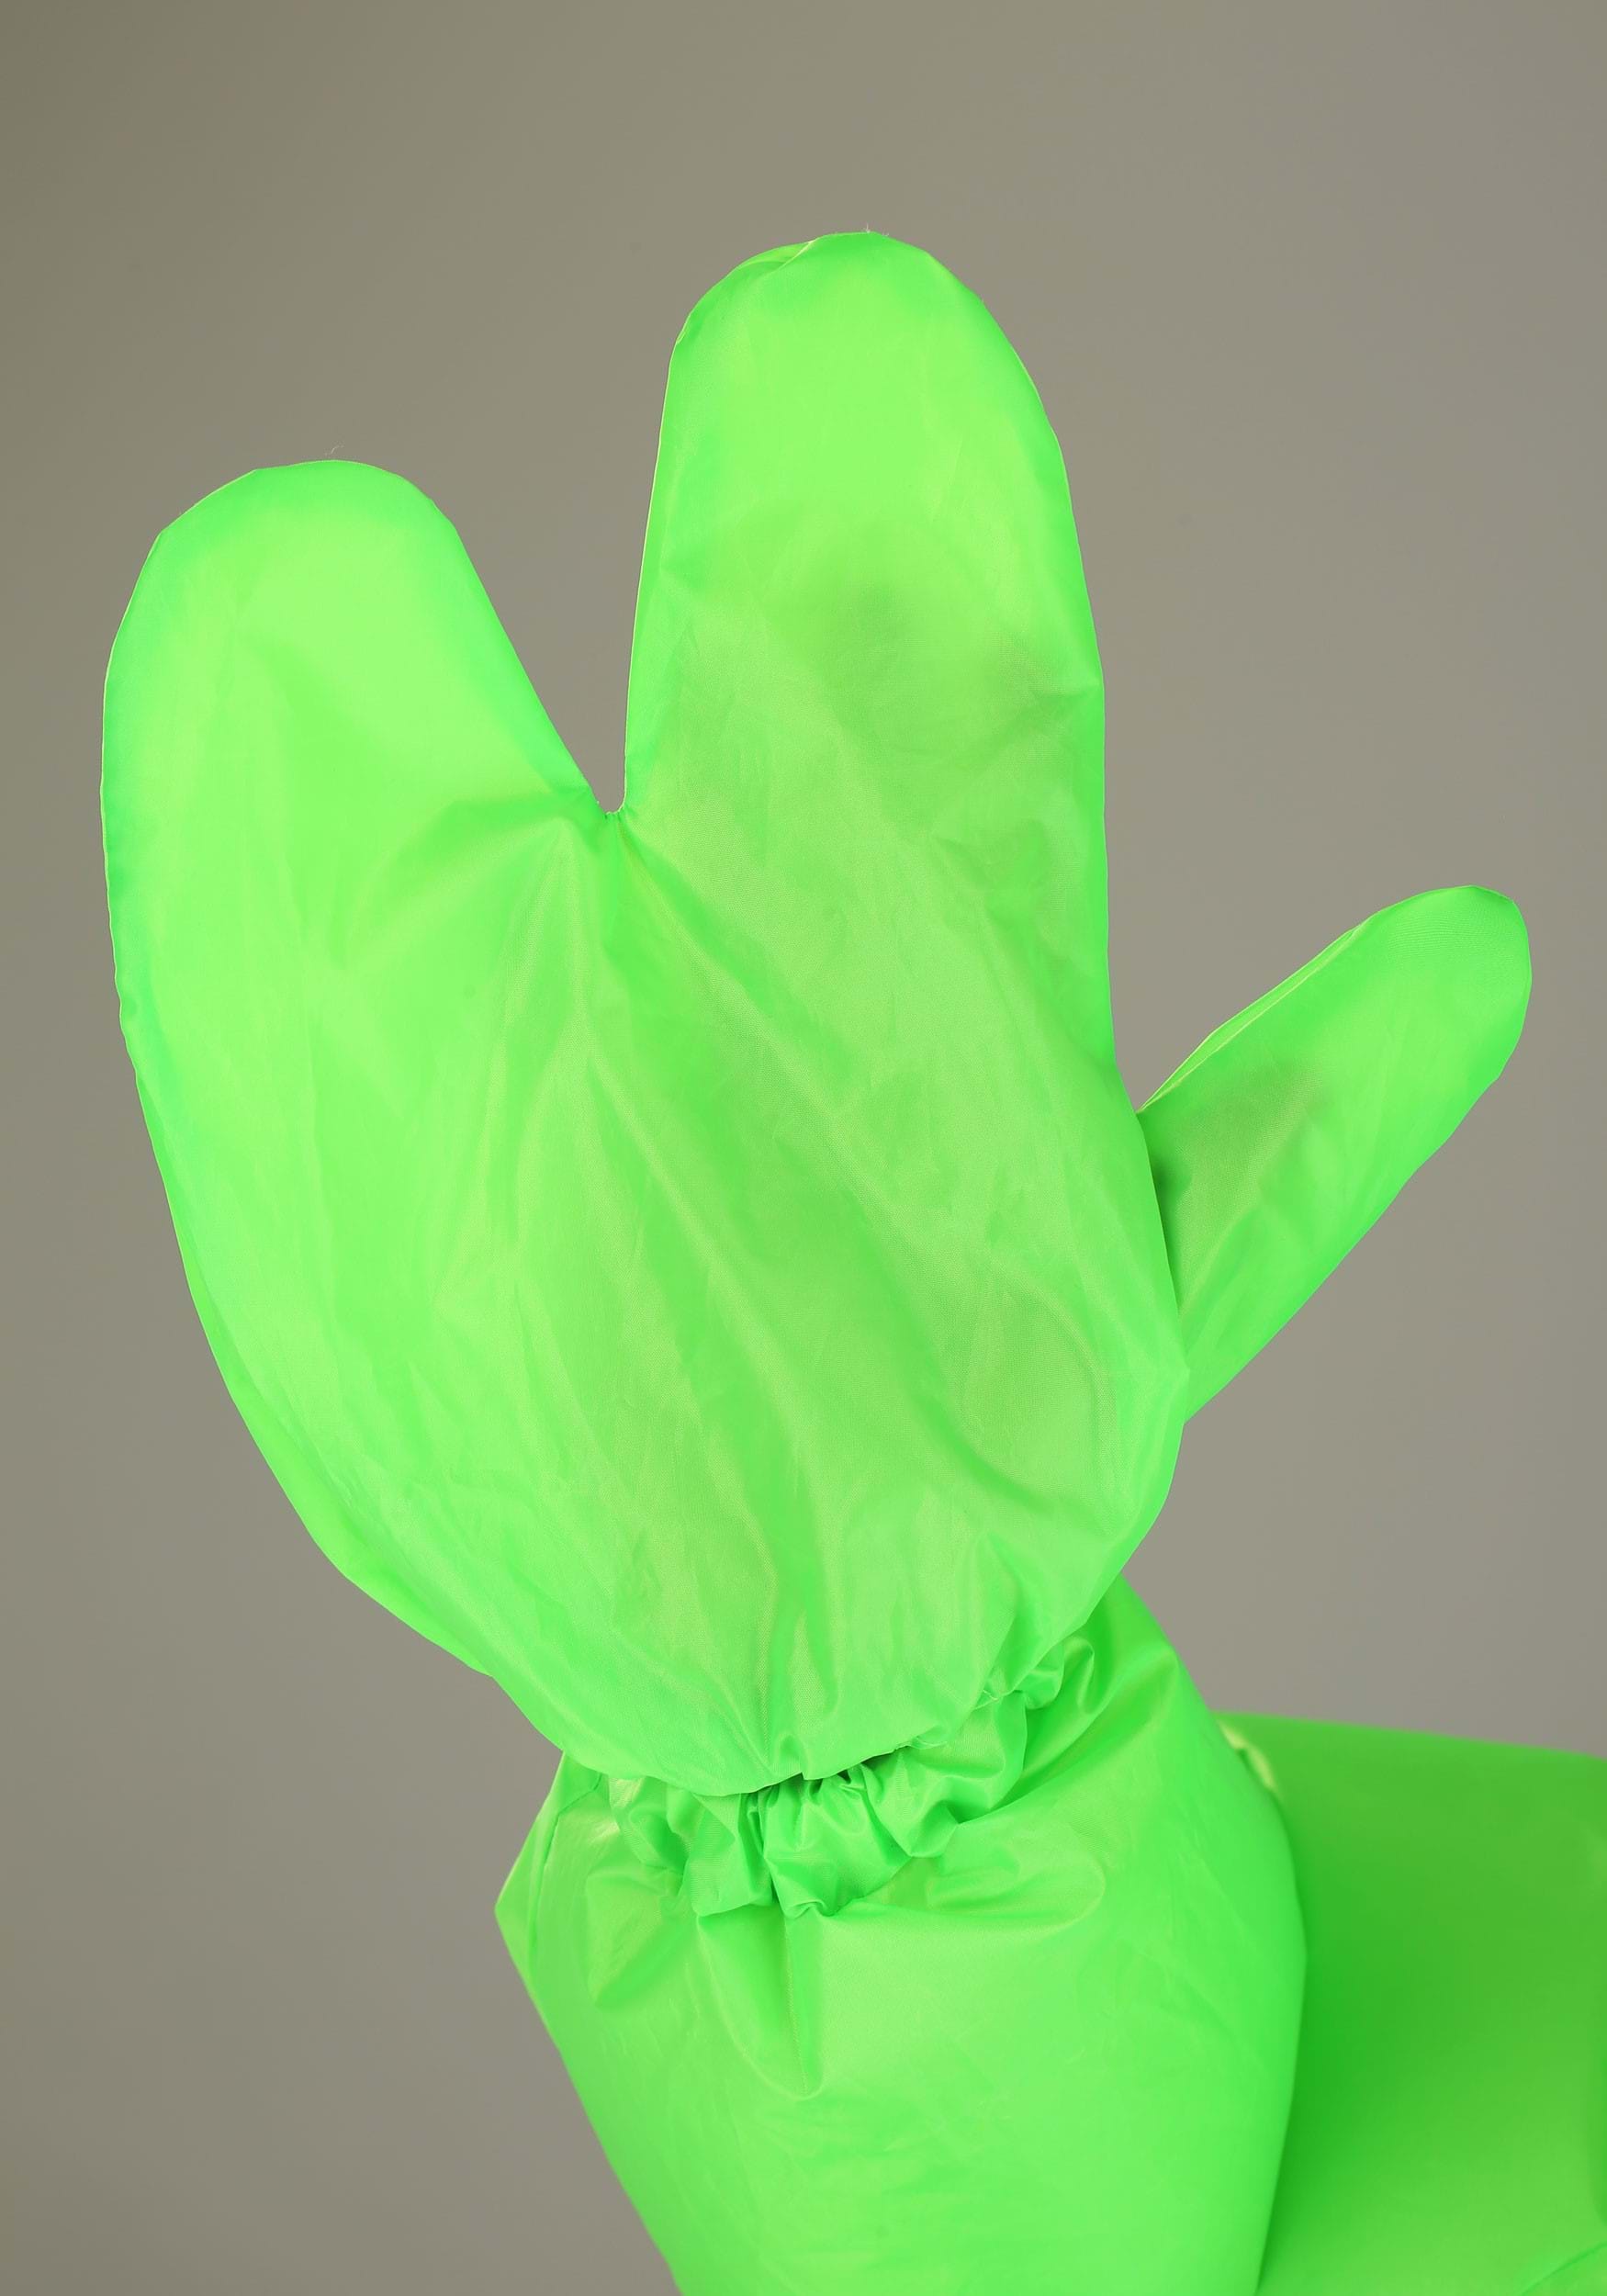 Kid's Inflatable Alien Costume